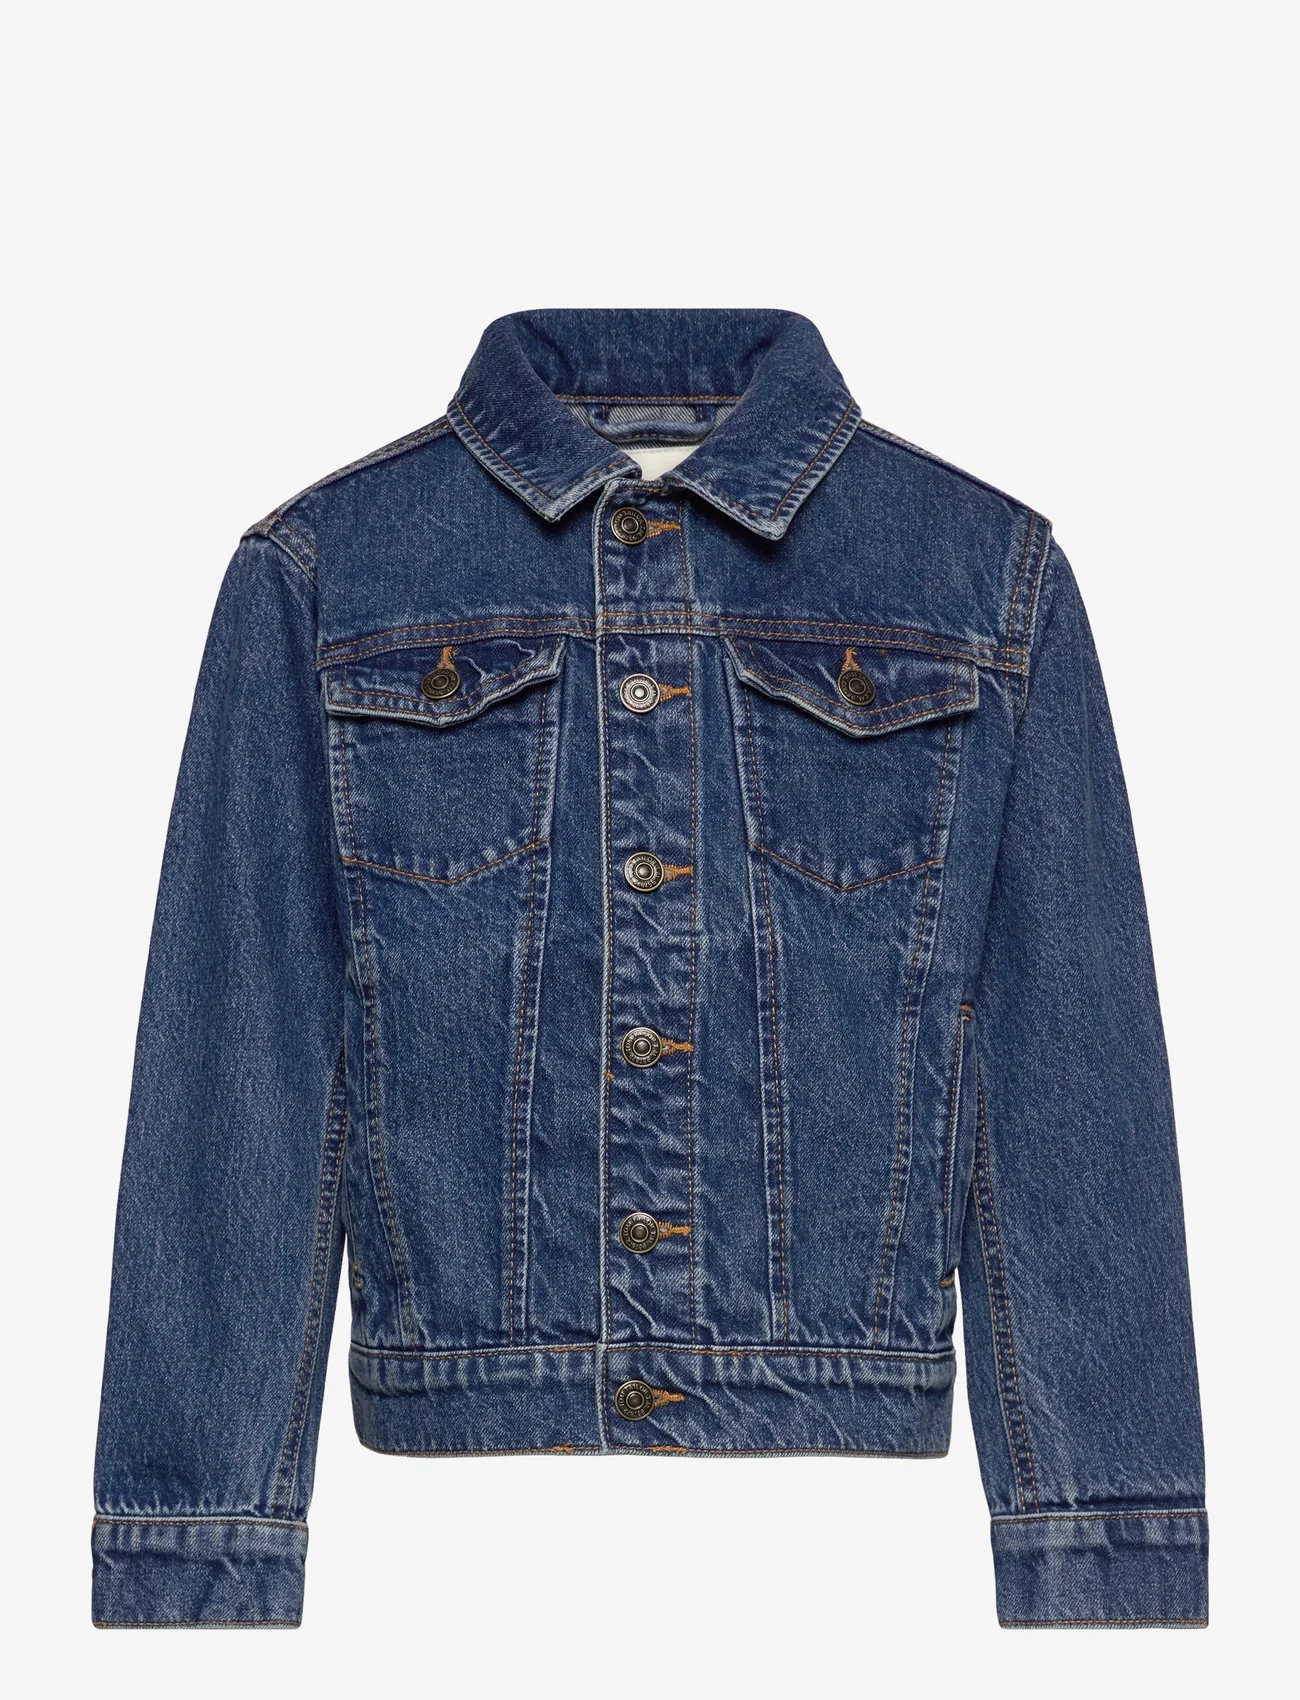 Tom Tailor - denim jacket - die niedrigsten preise - used mid stone blue denim - 0